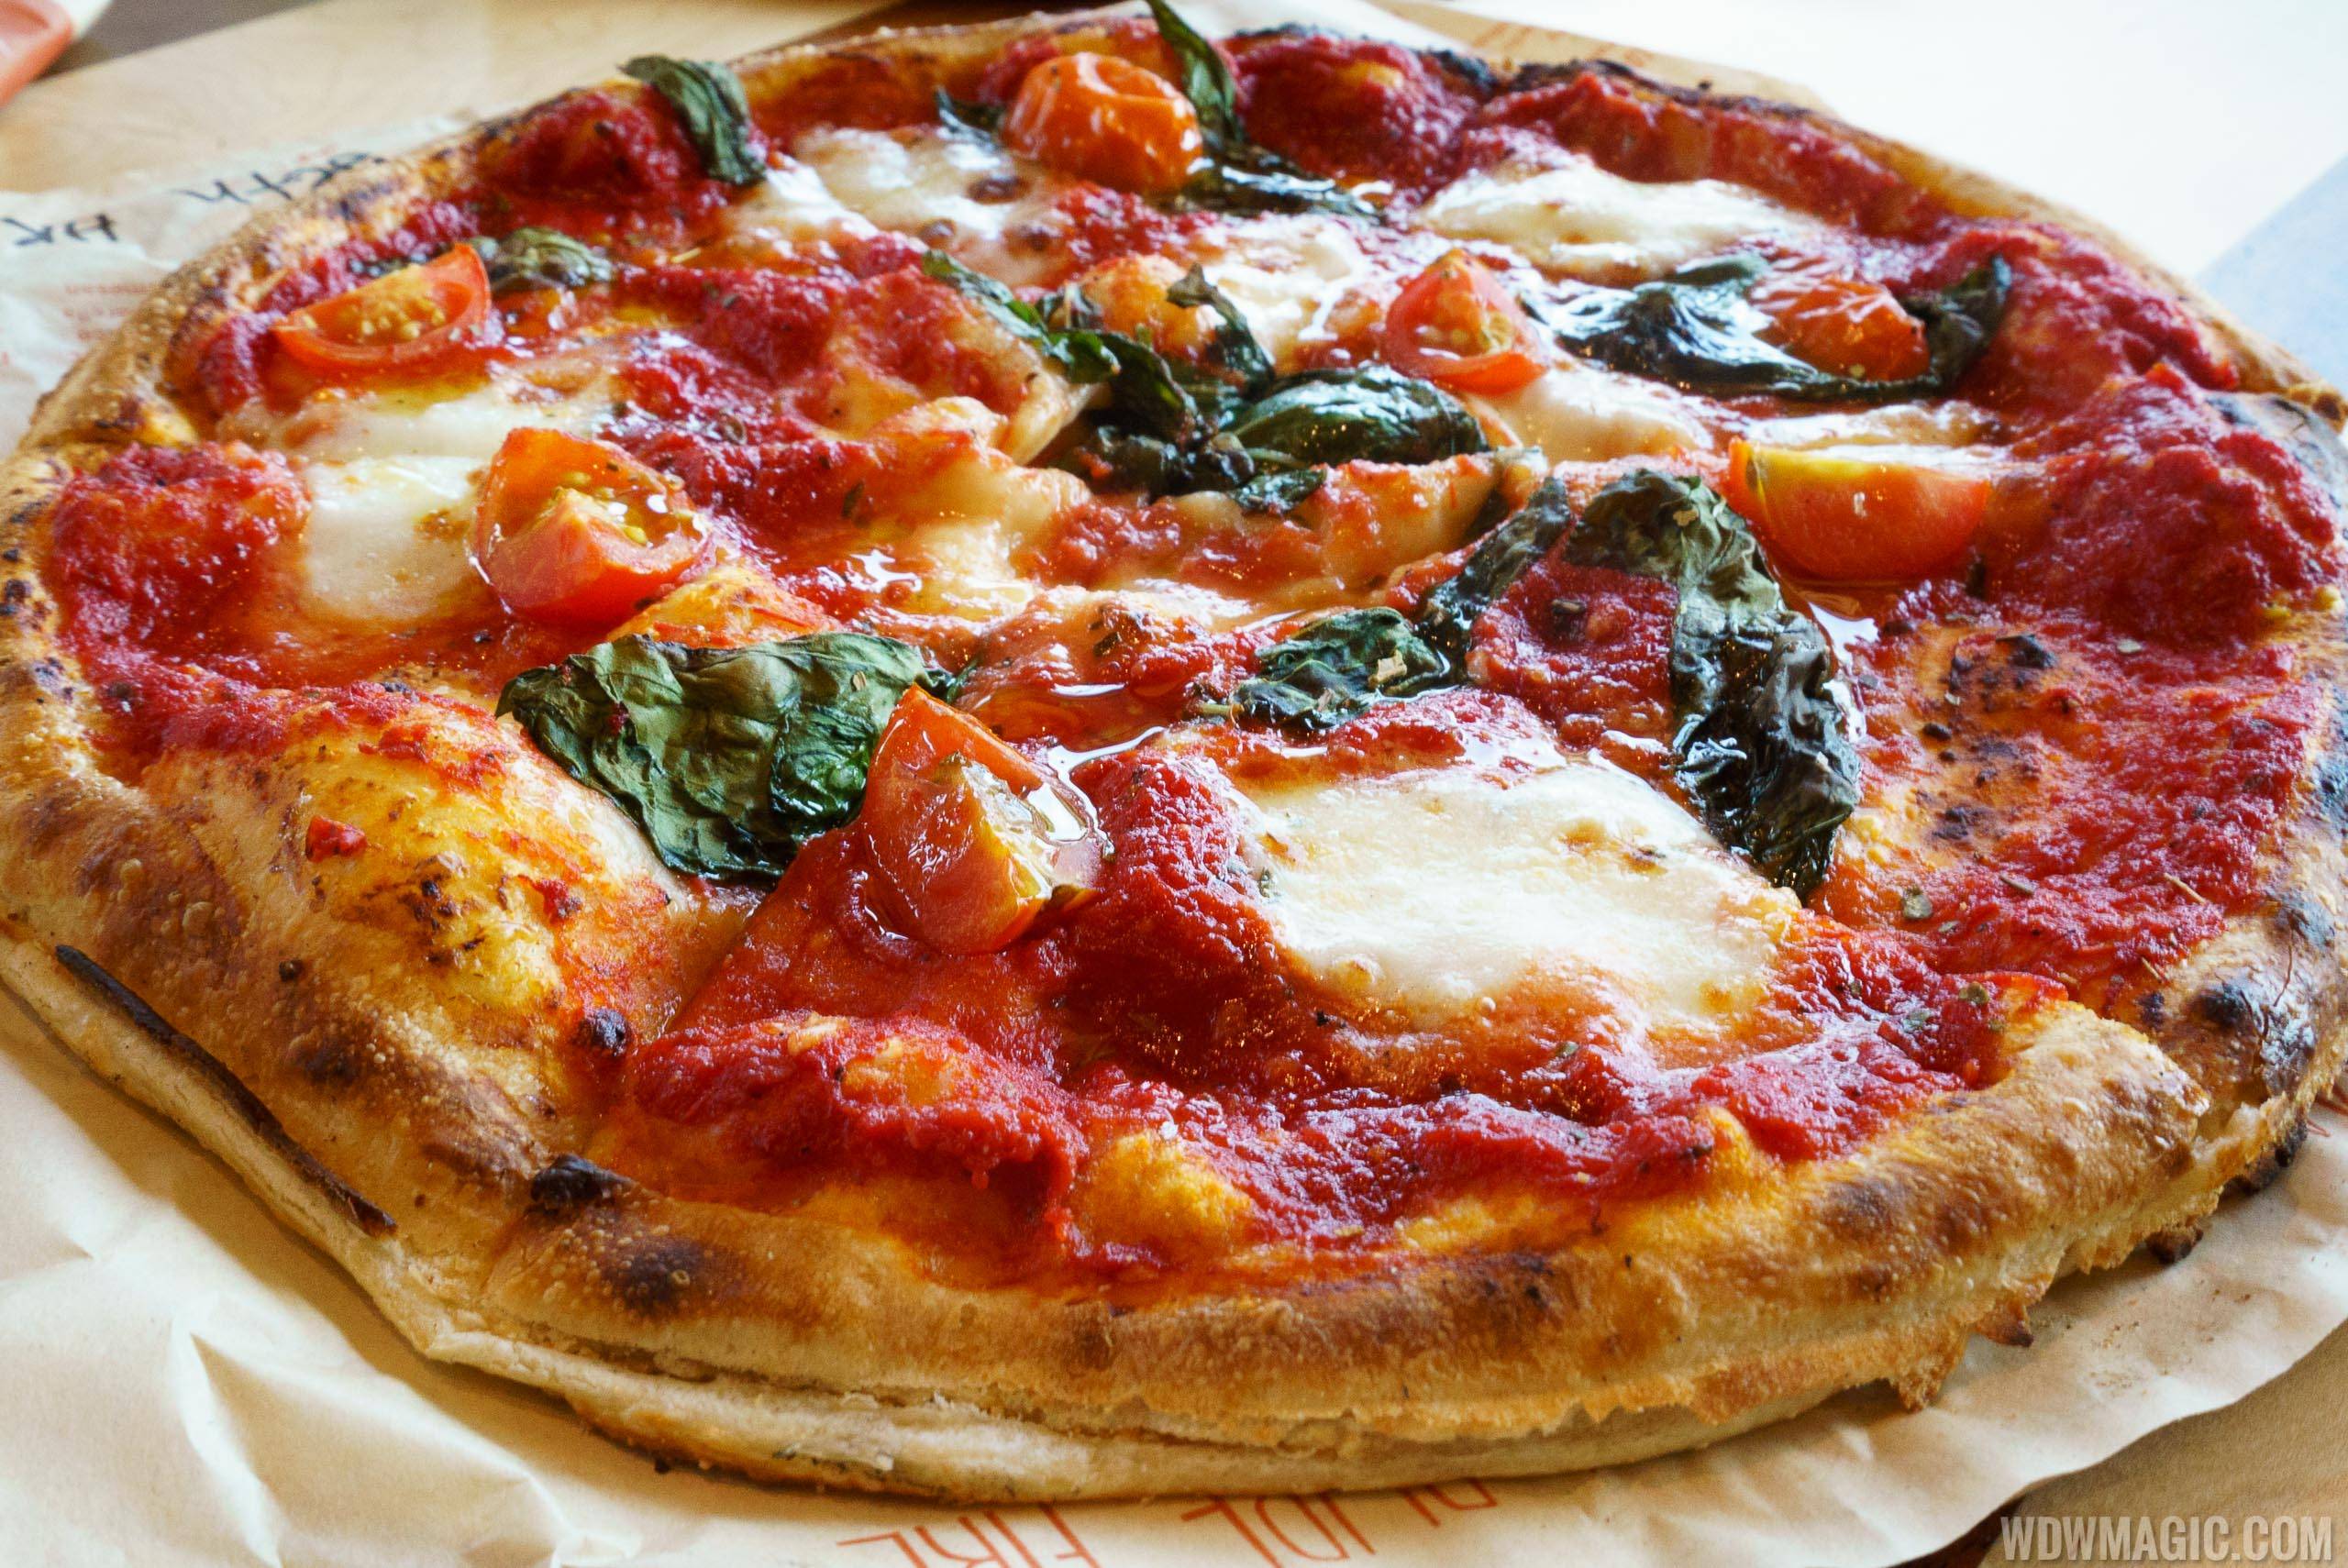 Blaze Pizza - Red Vine signature pizza - Ovalini Mozzarella, Cherry Tomatoes, Parmesan, Basil, Red Sauce and Olive Oil Drizzle